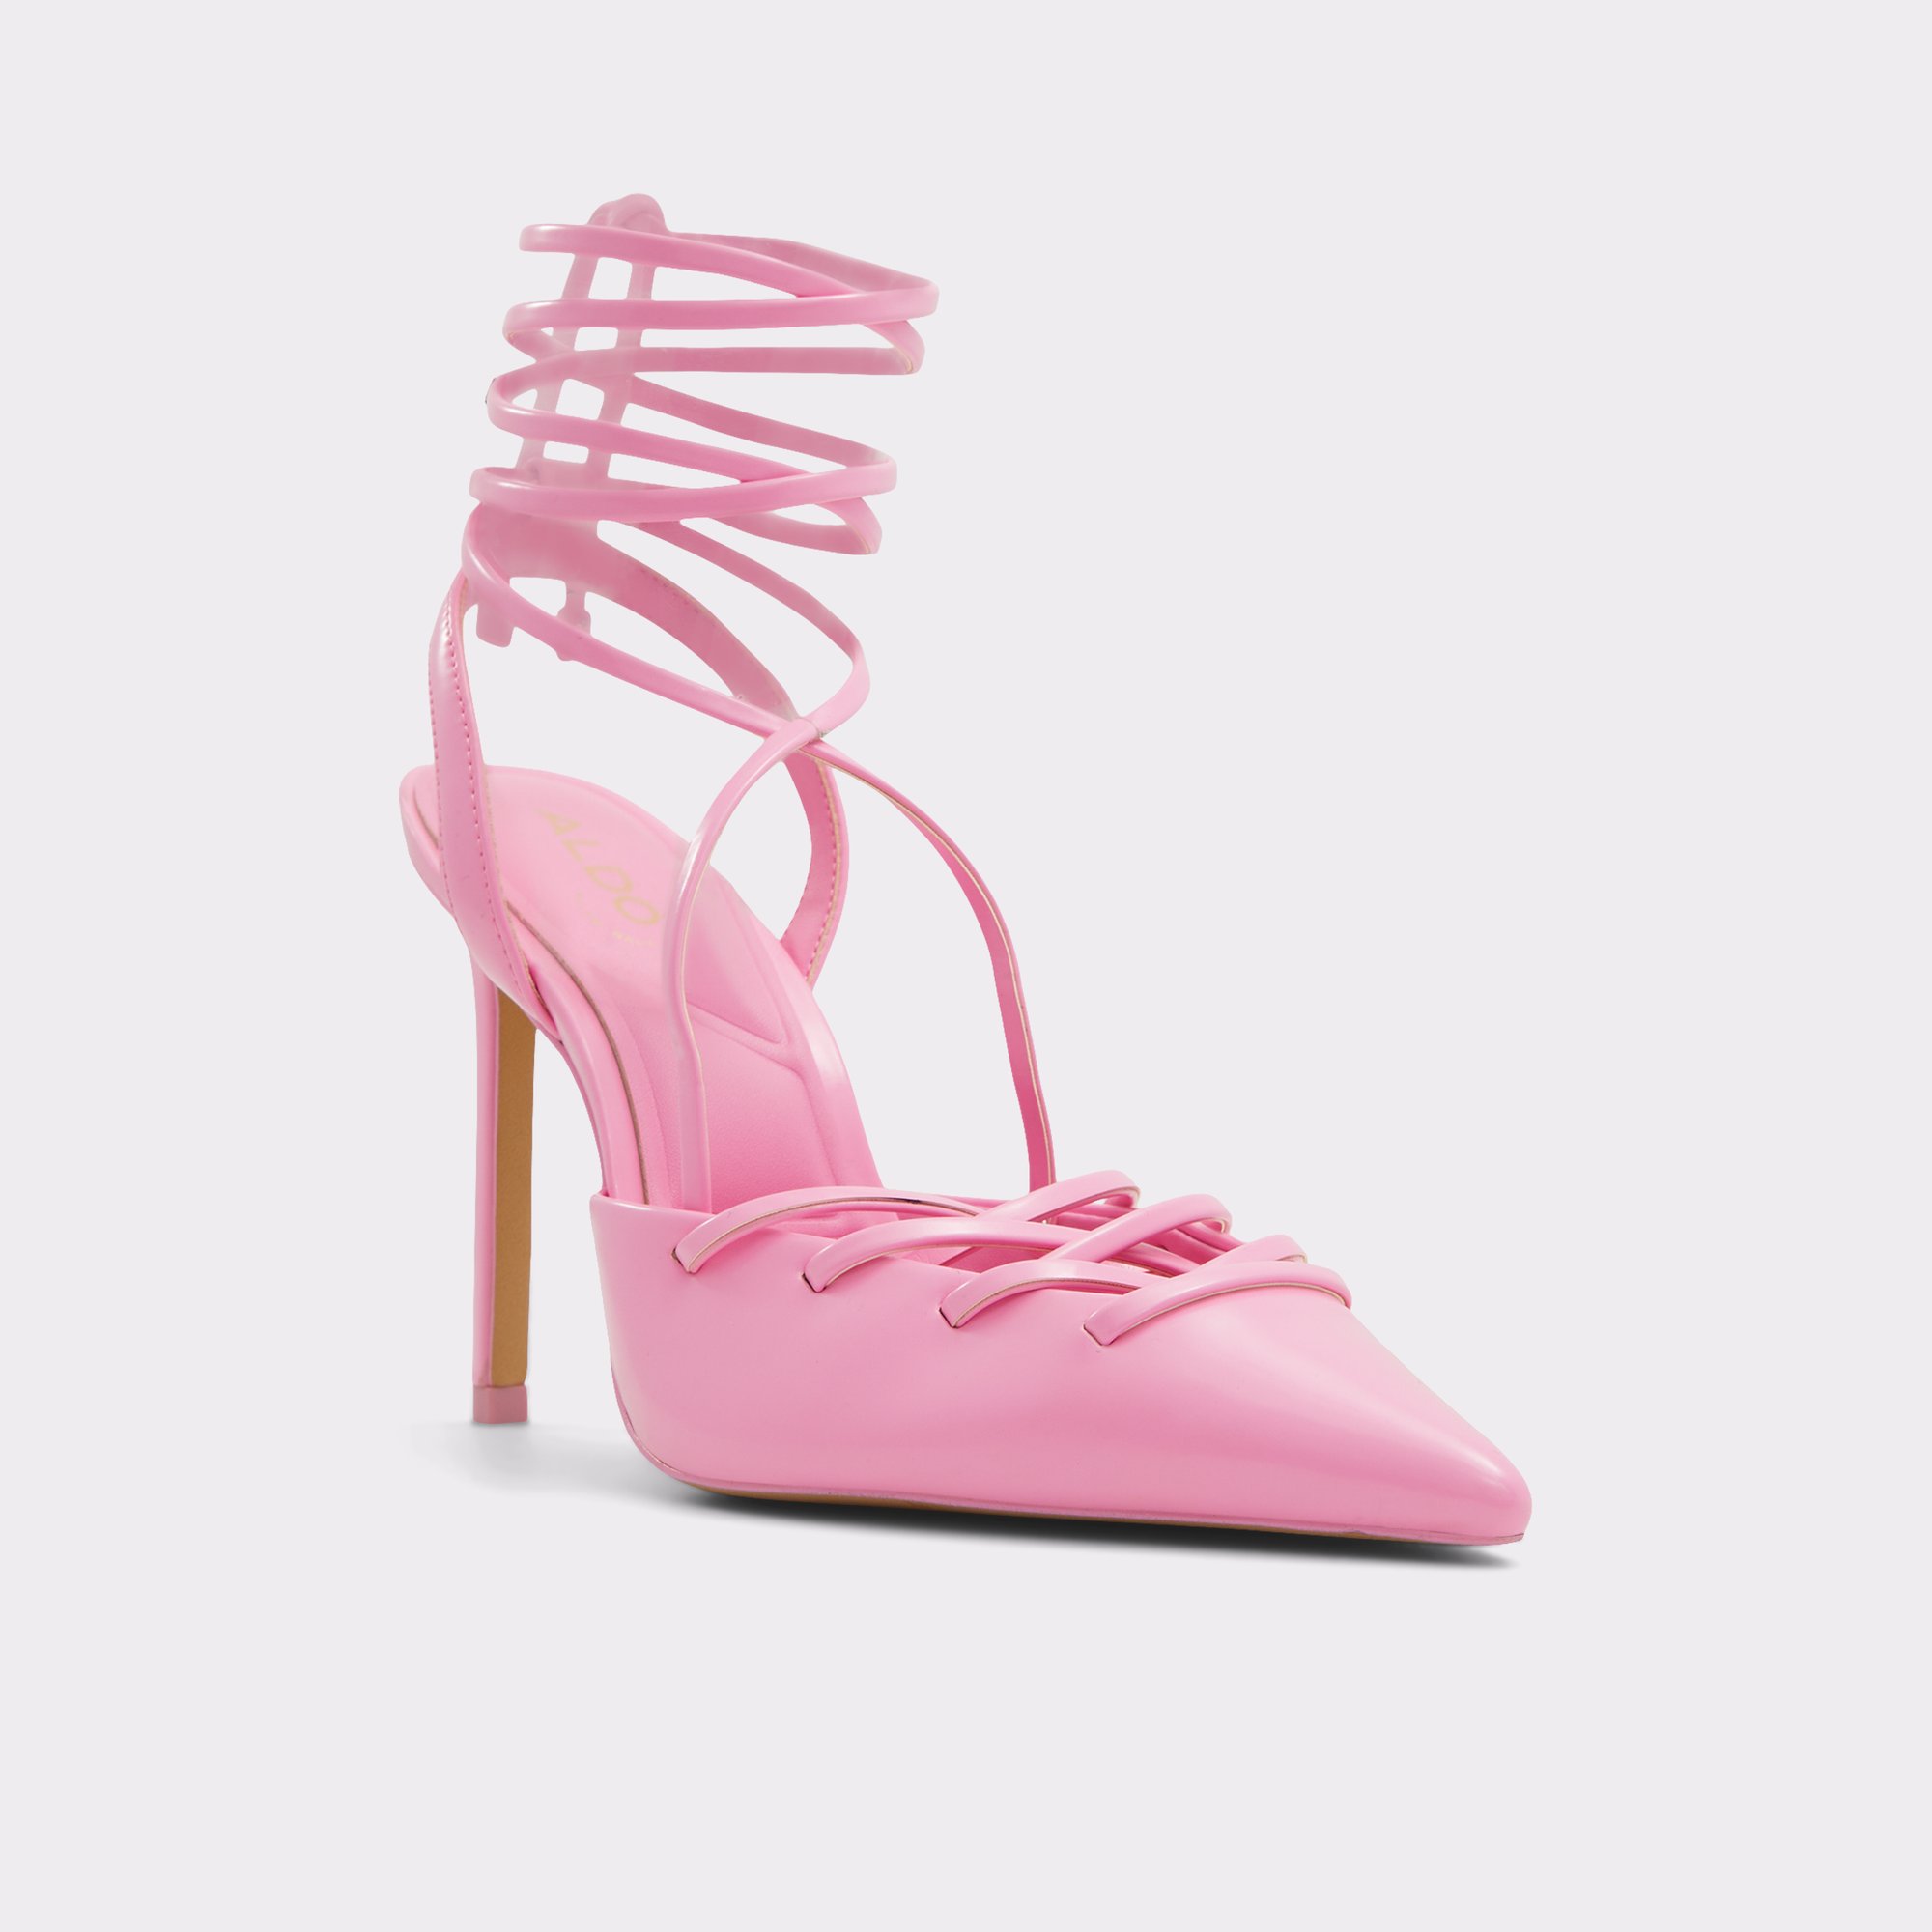 Maely Bright Pink Women's Heels | ALDO Canada